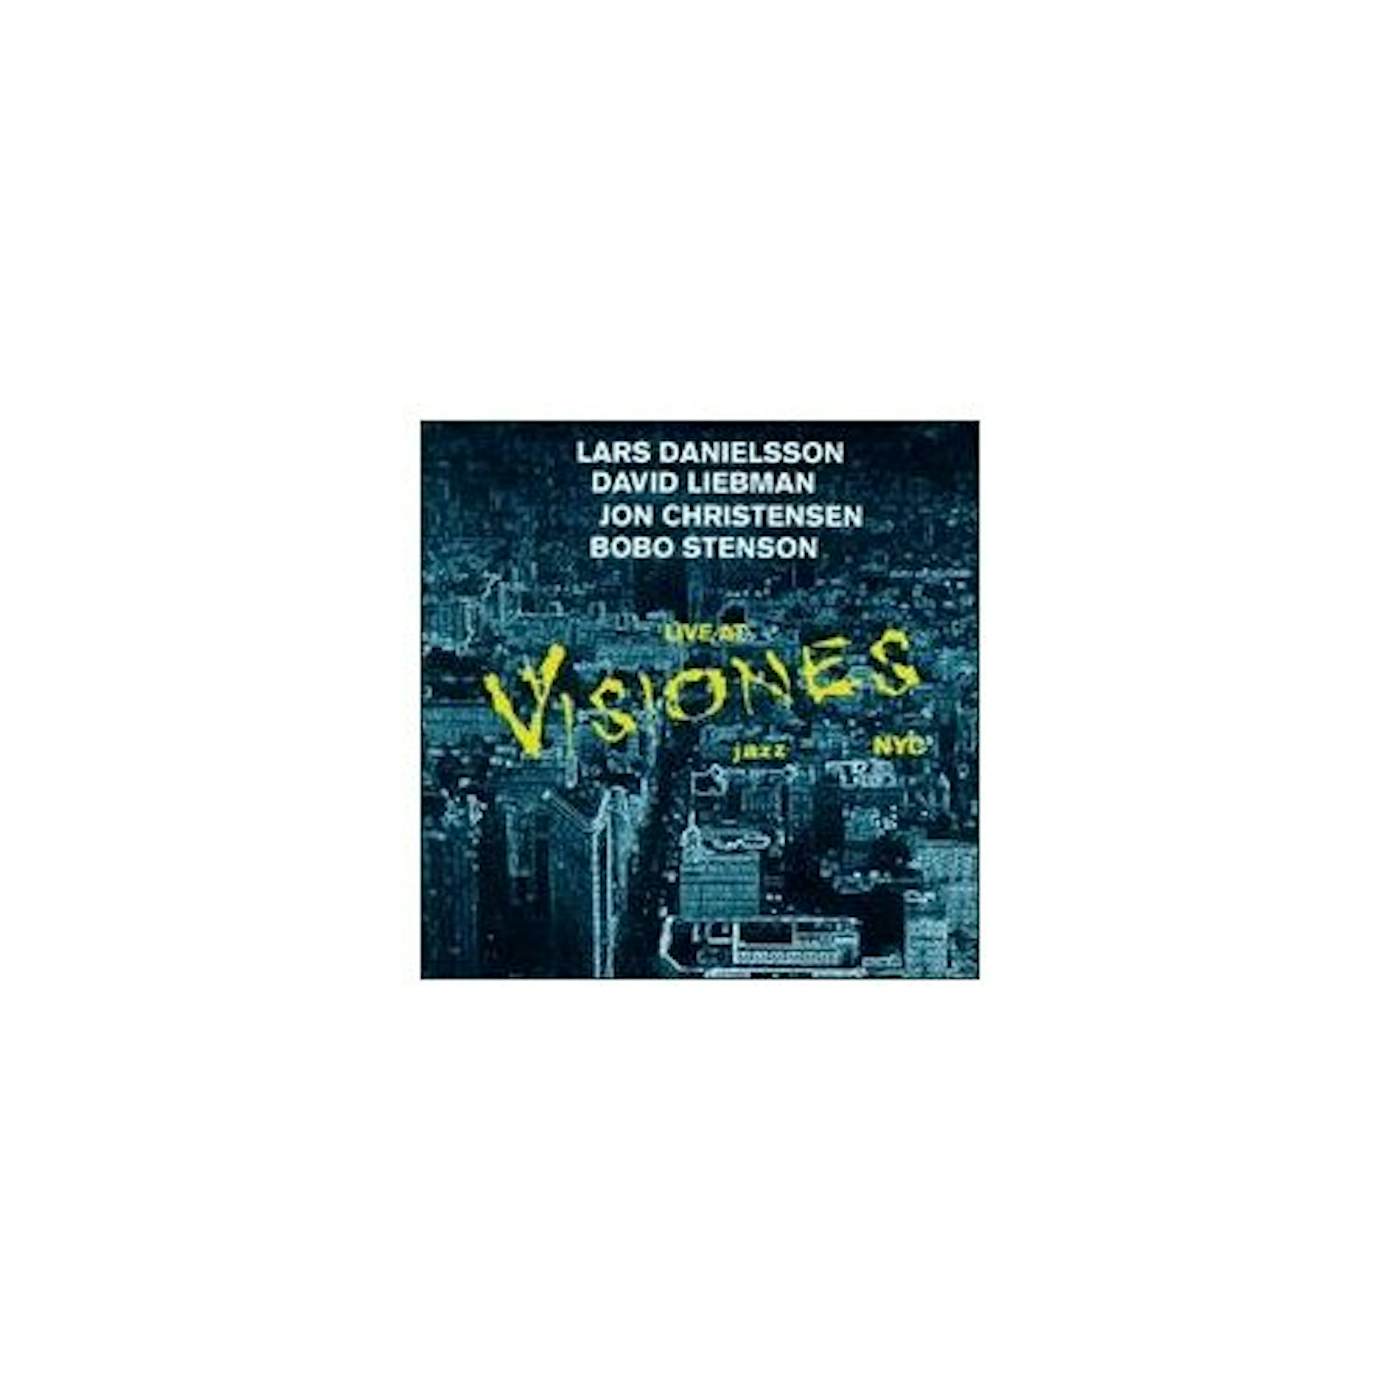 Lars Danielsson VISIONES CD